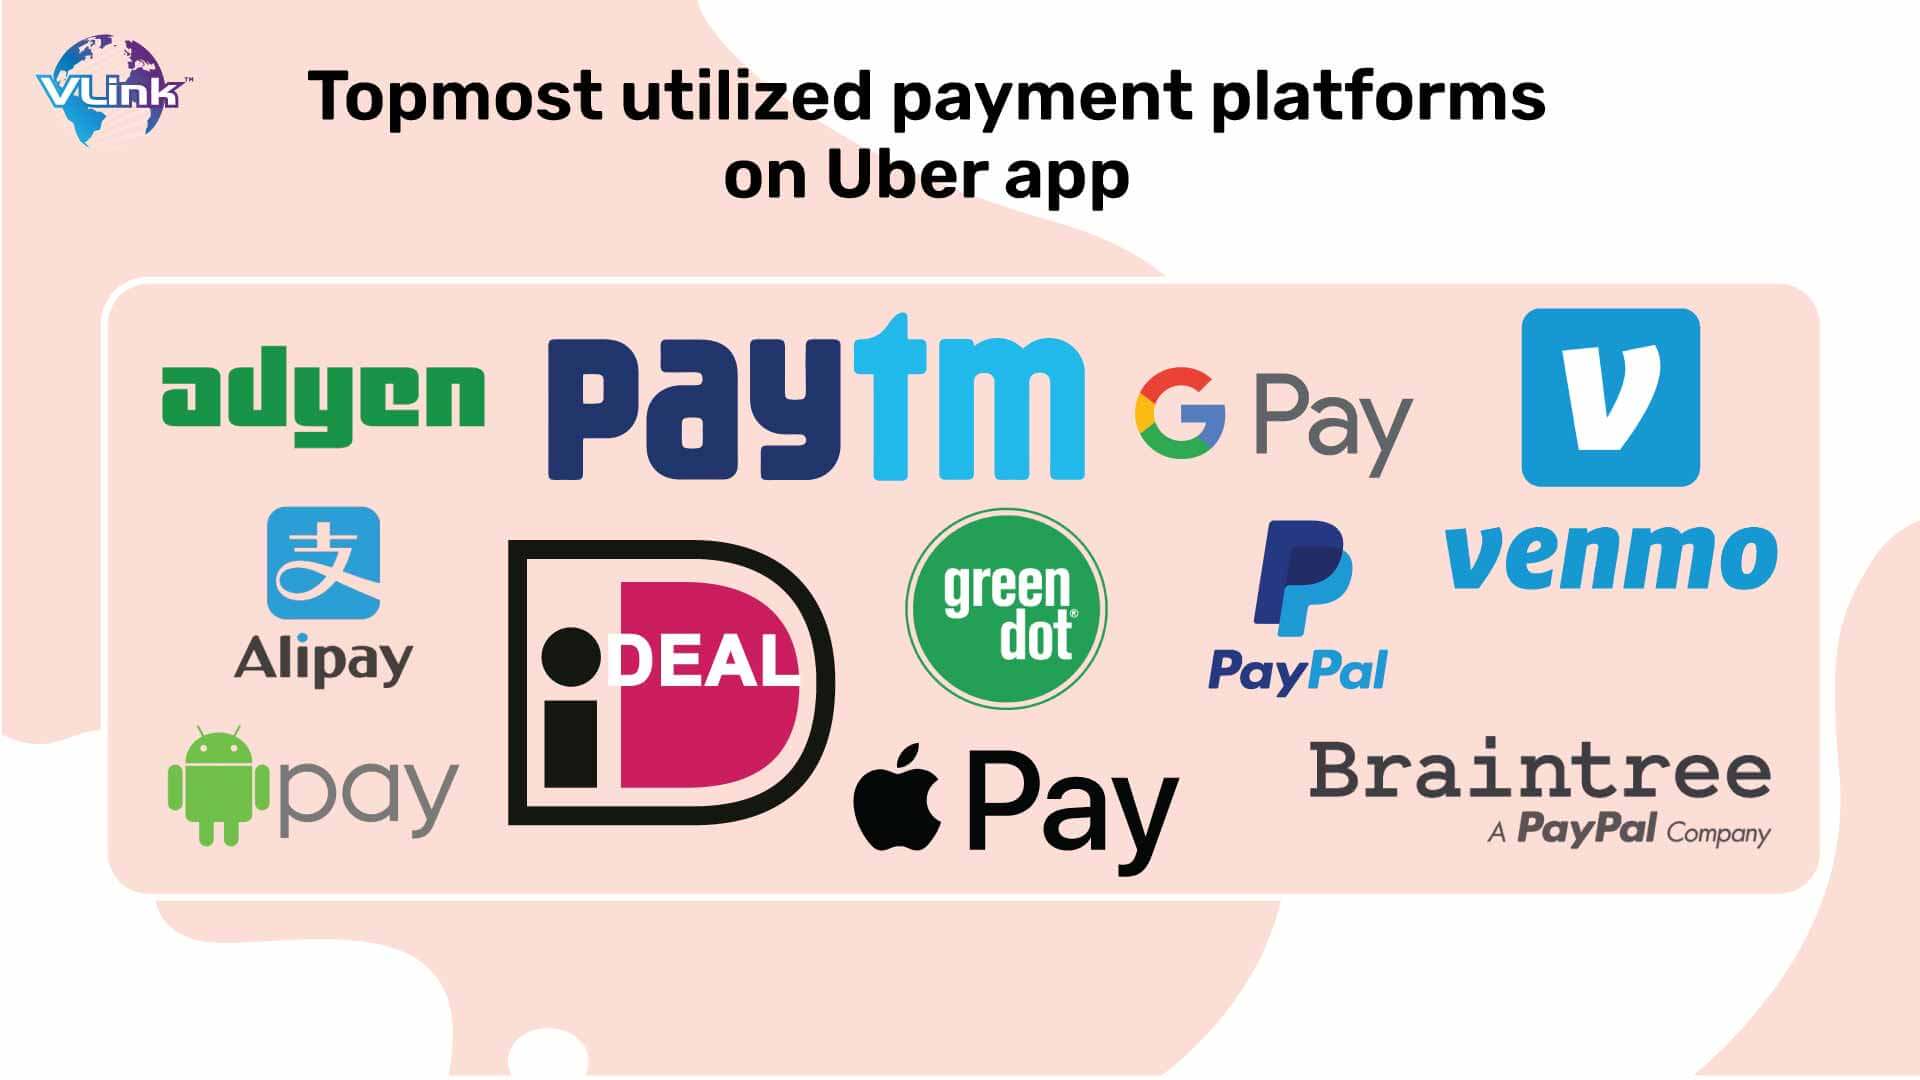 Top most utilized payment platforms on Uber app